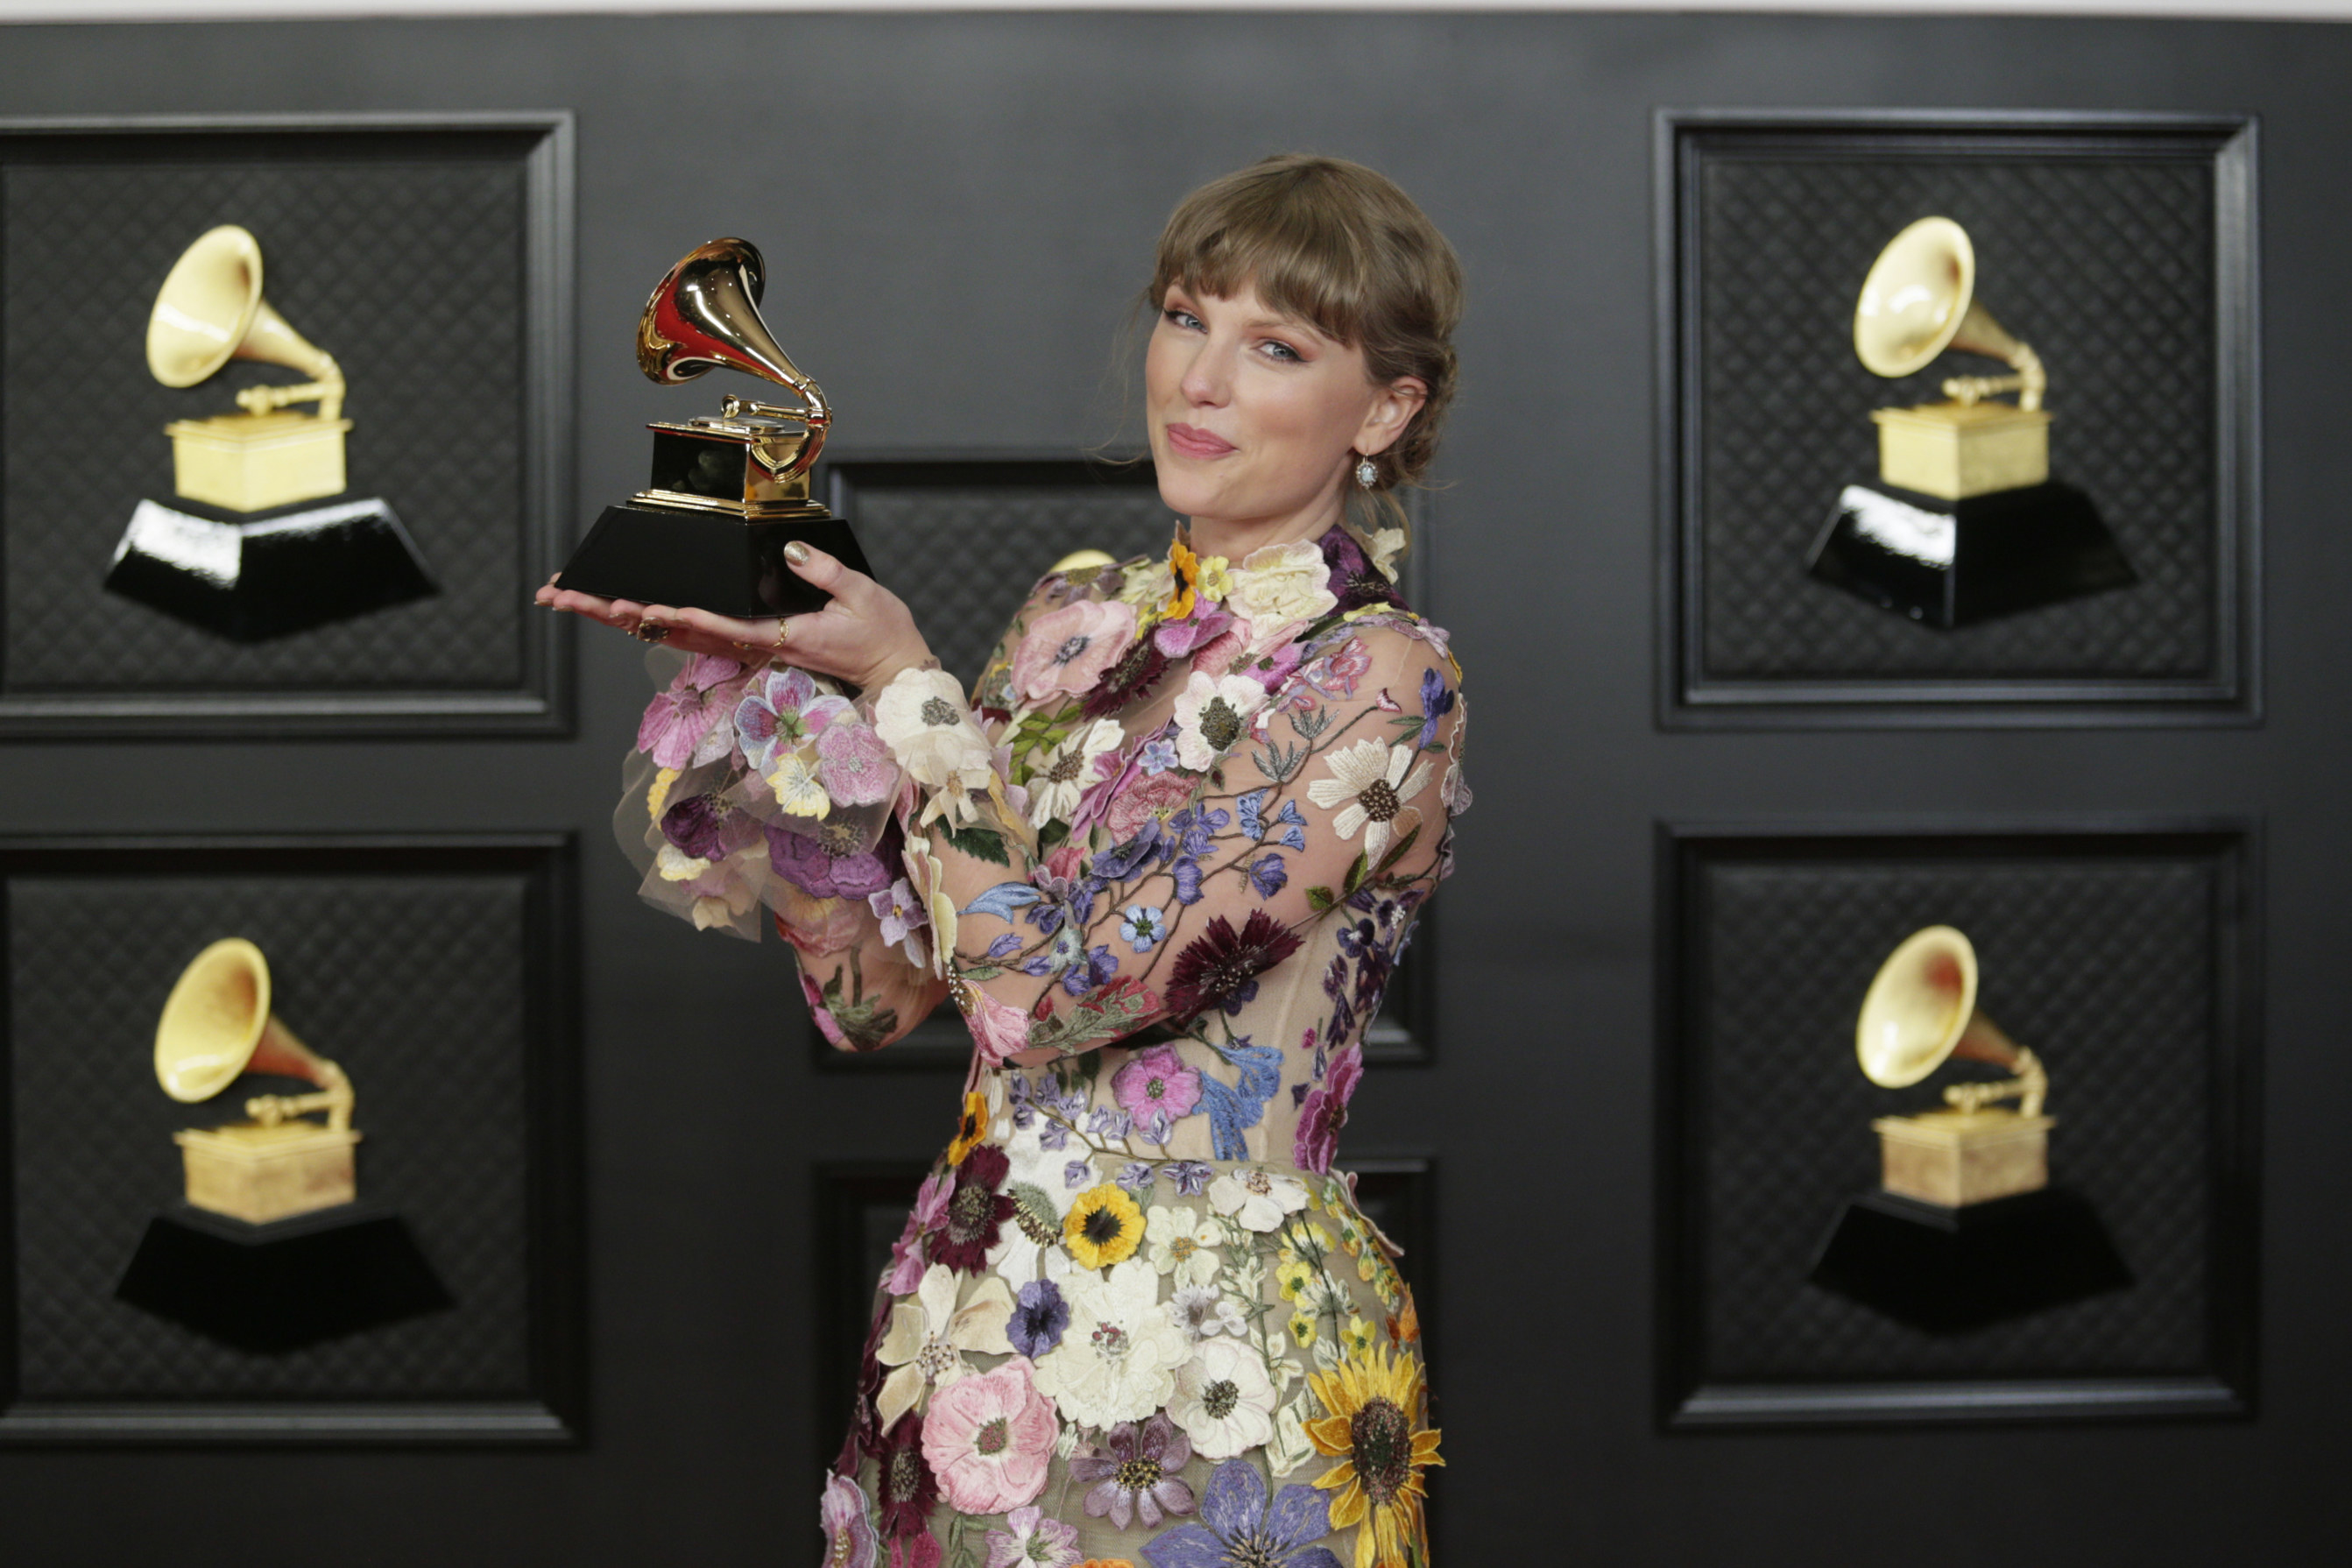 Holding up a Grammy